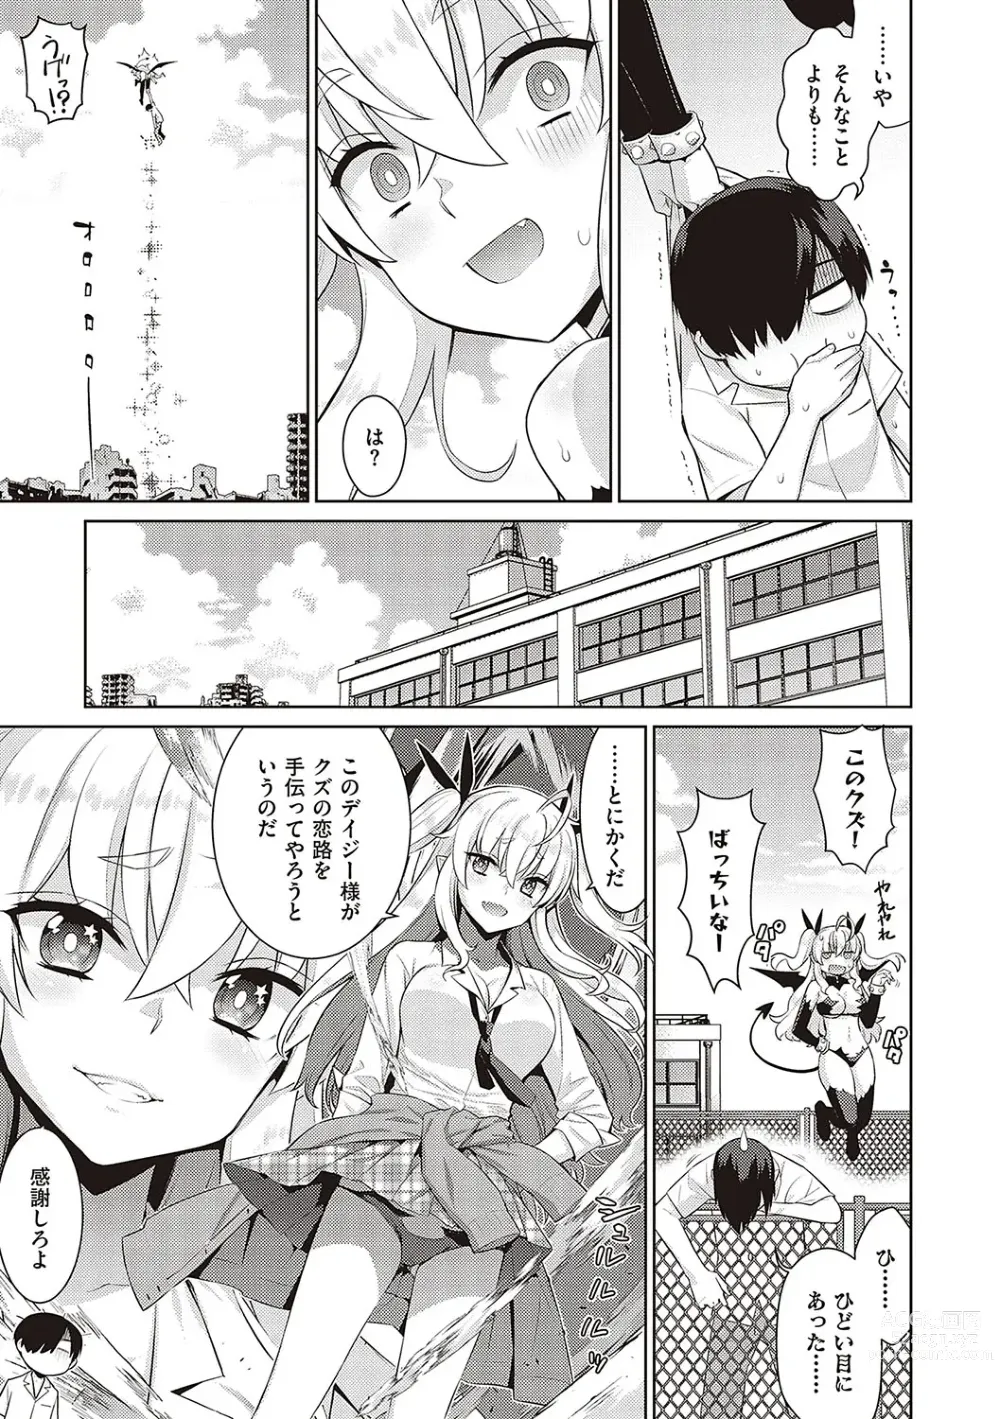 Page 10 of manga KOAKUMA DAISY